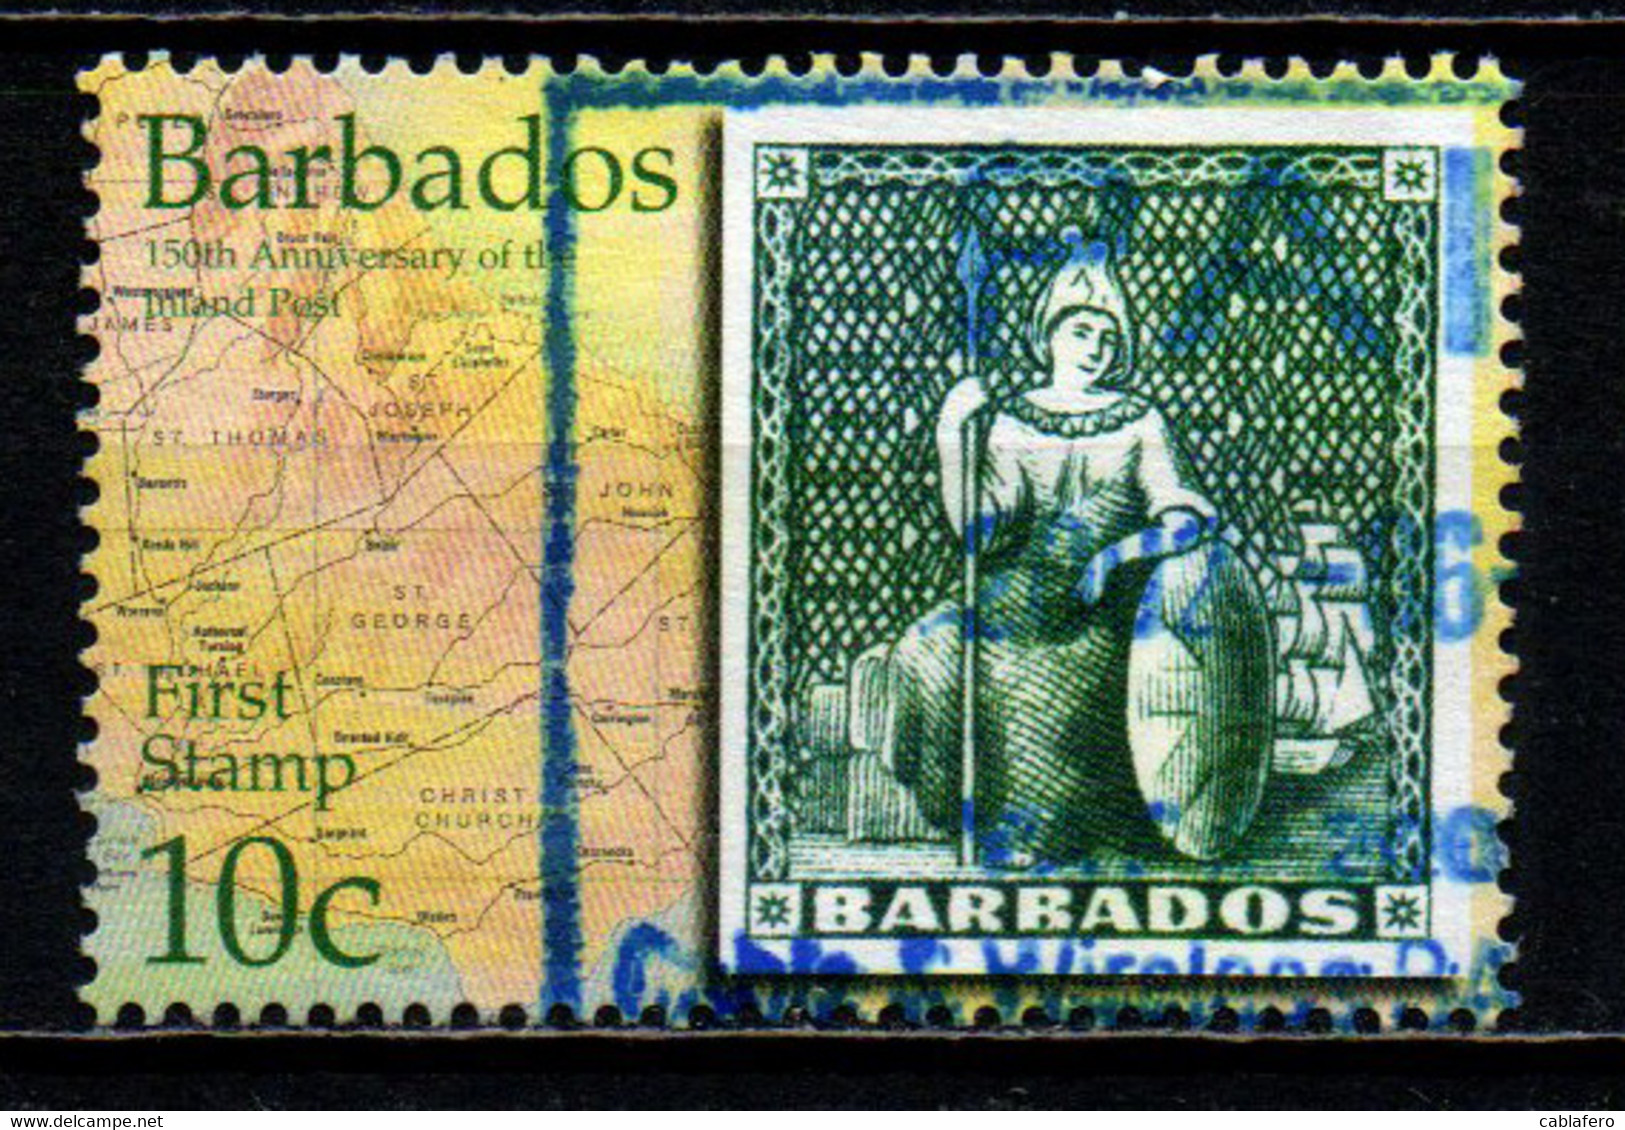 BARBADOS - 2002 - Map Of Barbados And Inland Post 150th Anniv. - USATO - Barbados (1966-...)